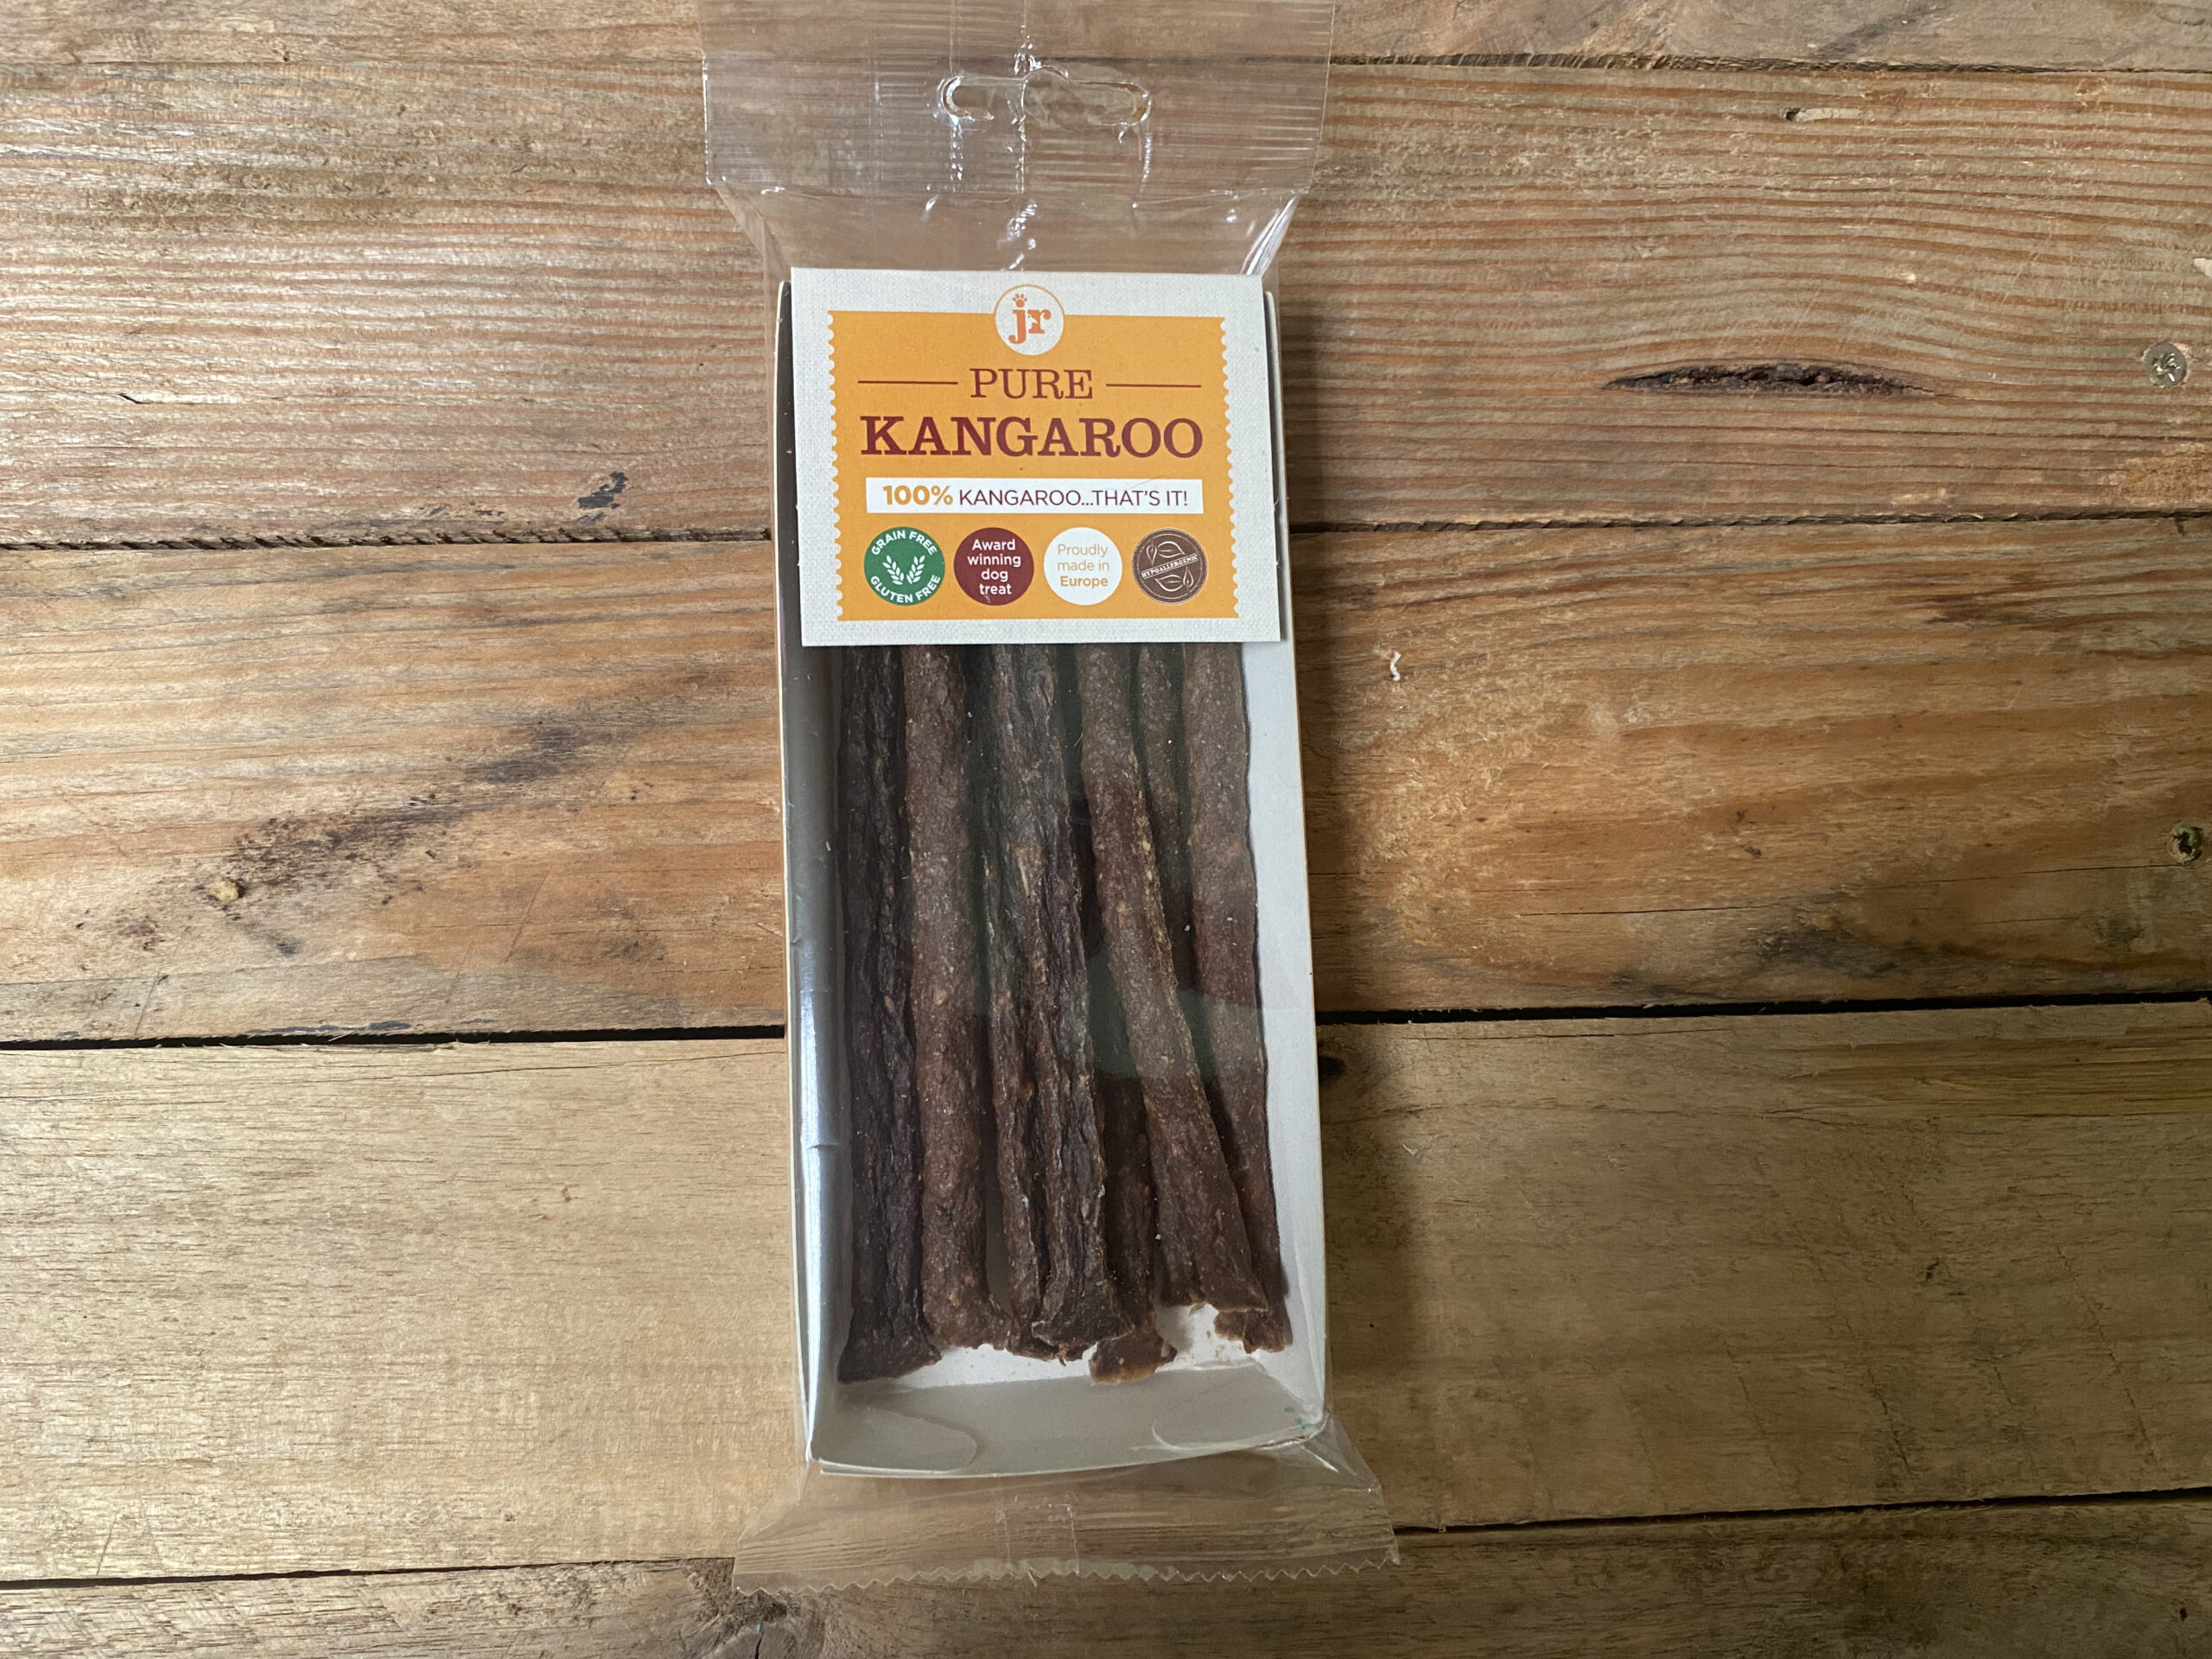 JR Pure Kangaroo Sticks – 50g